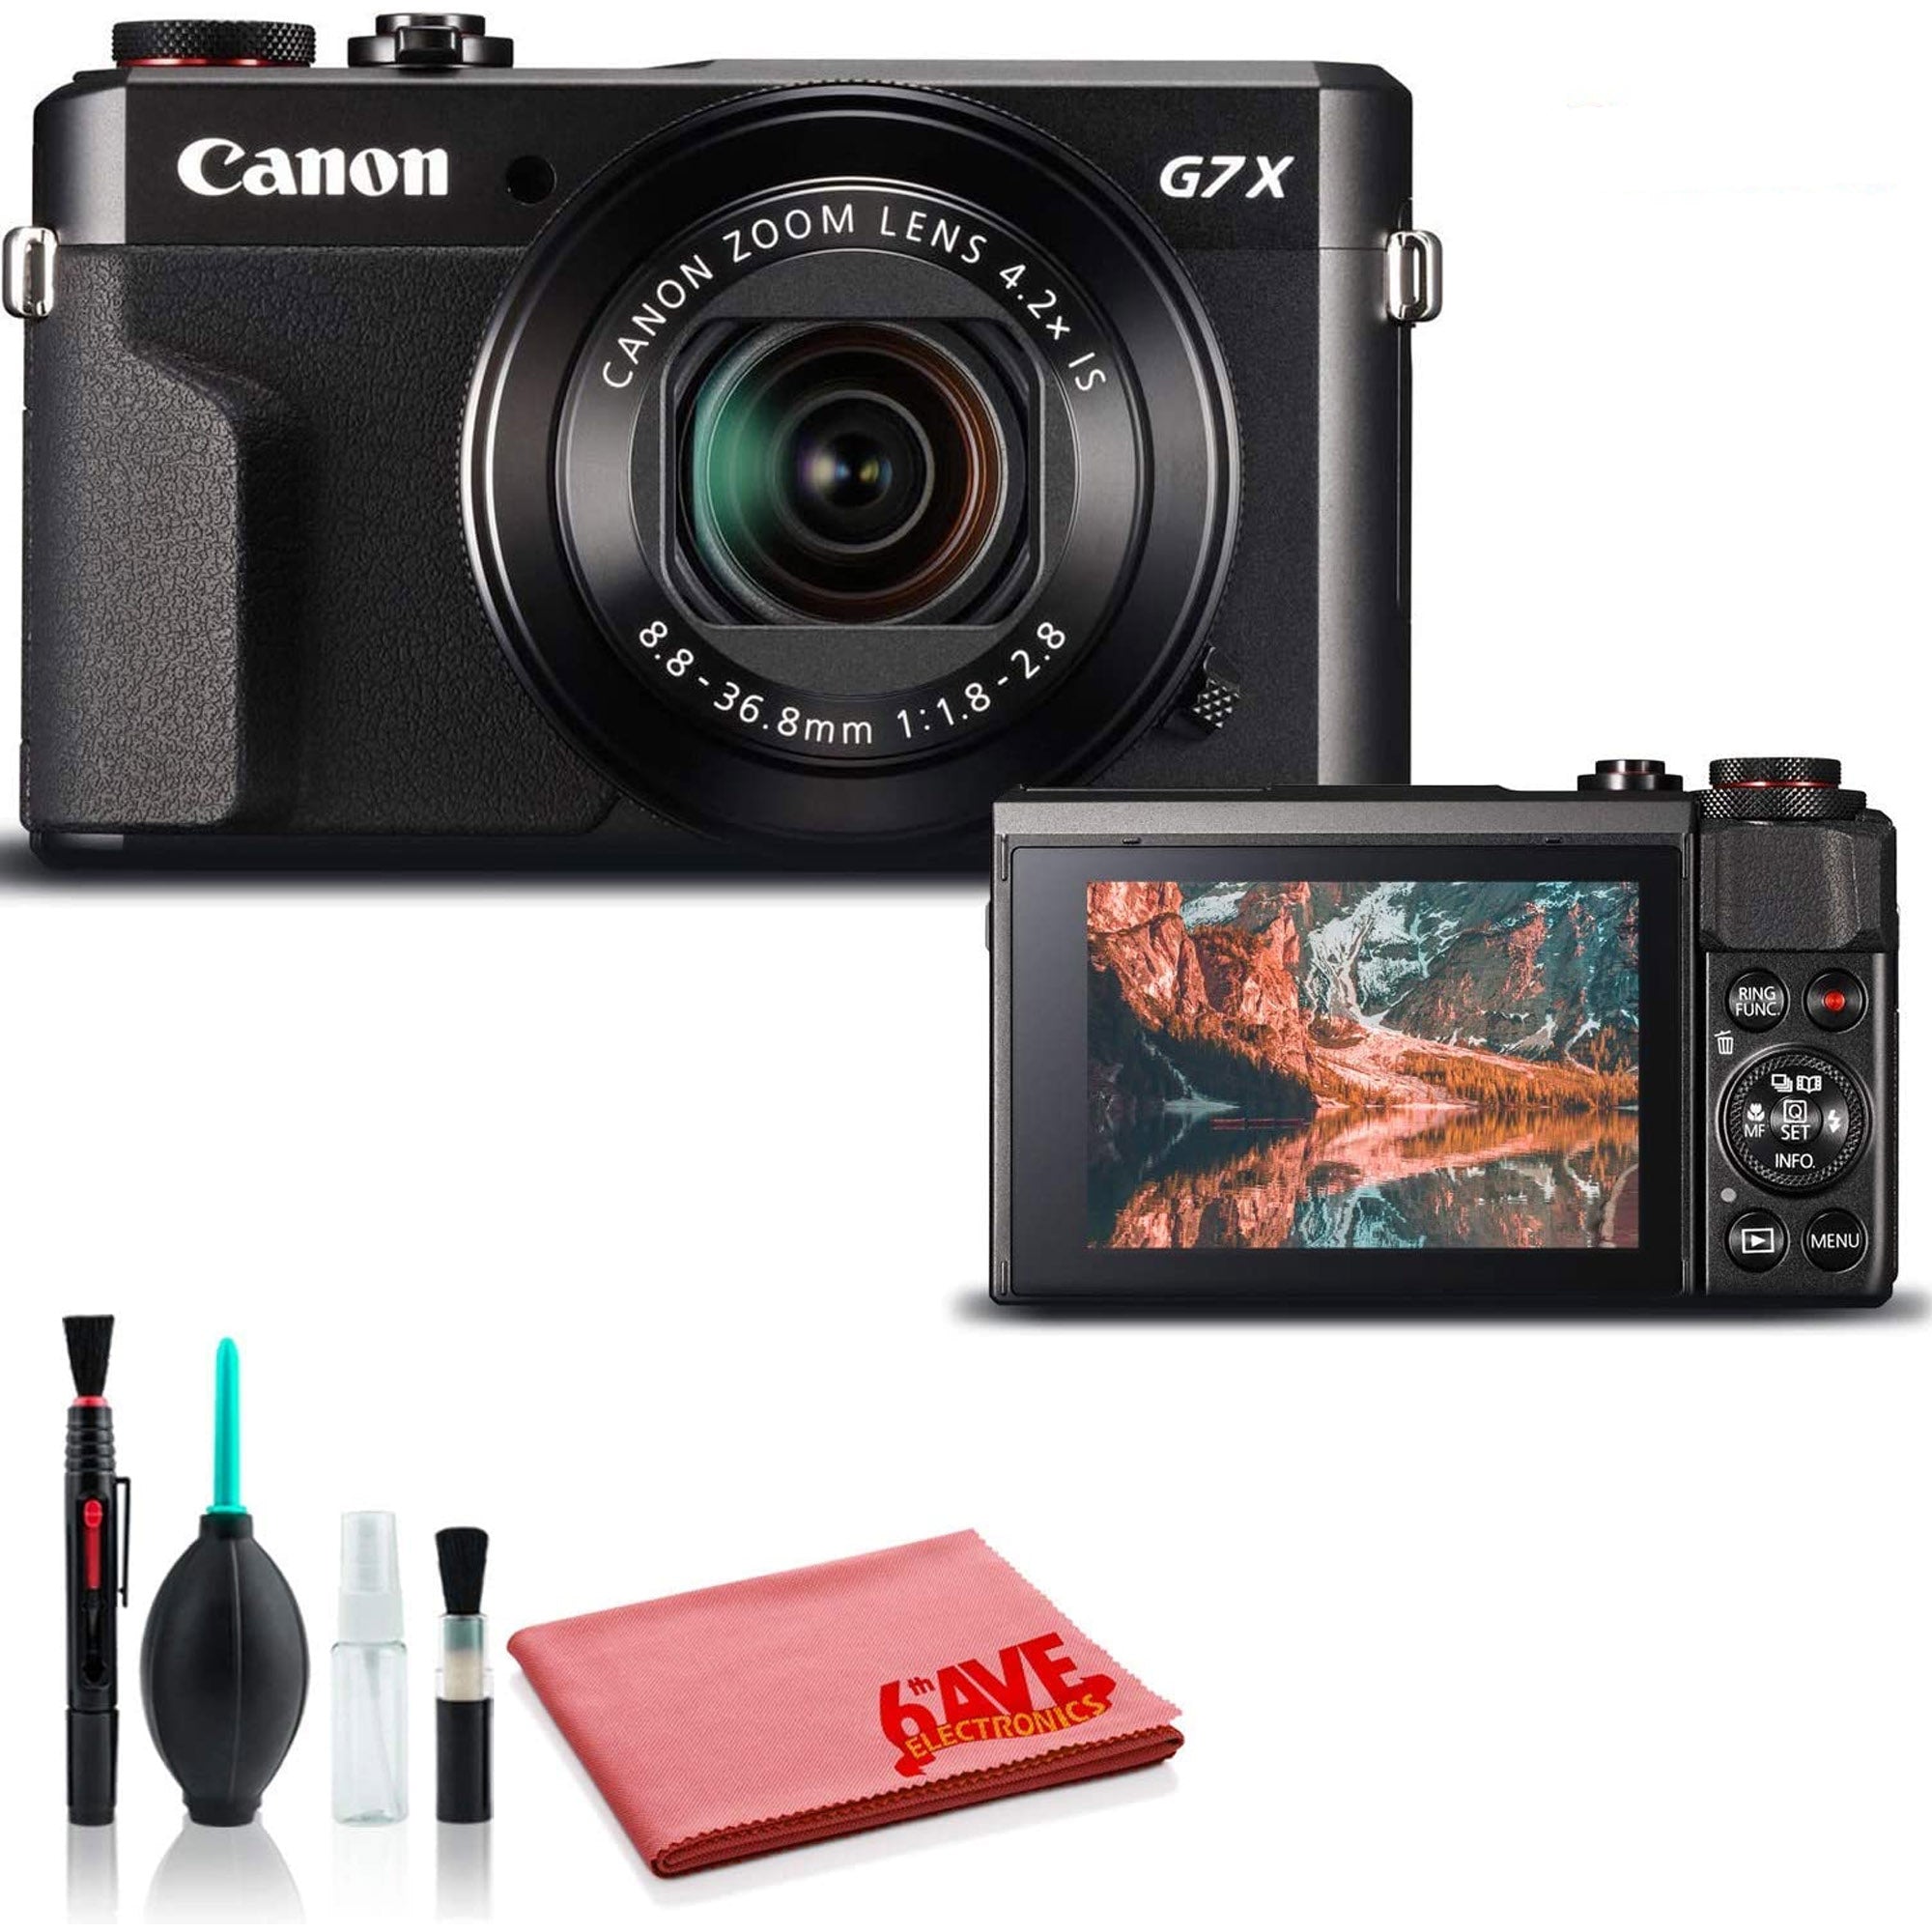 Canon PowerShot G7 X Mark II Digital Camera (International Model) - Standard Kit